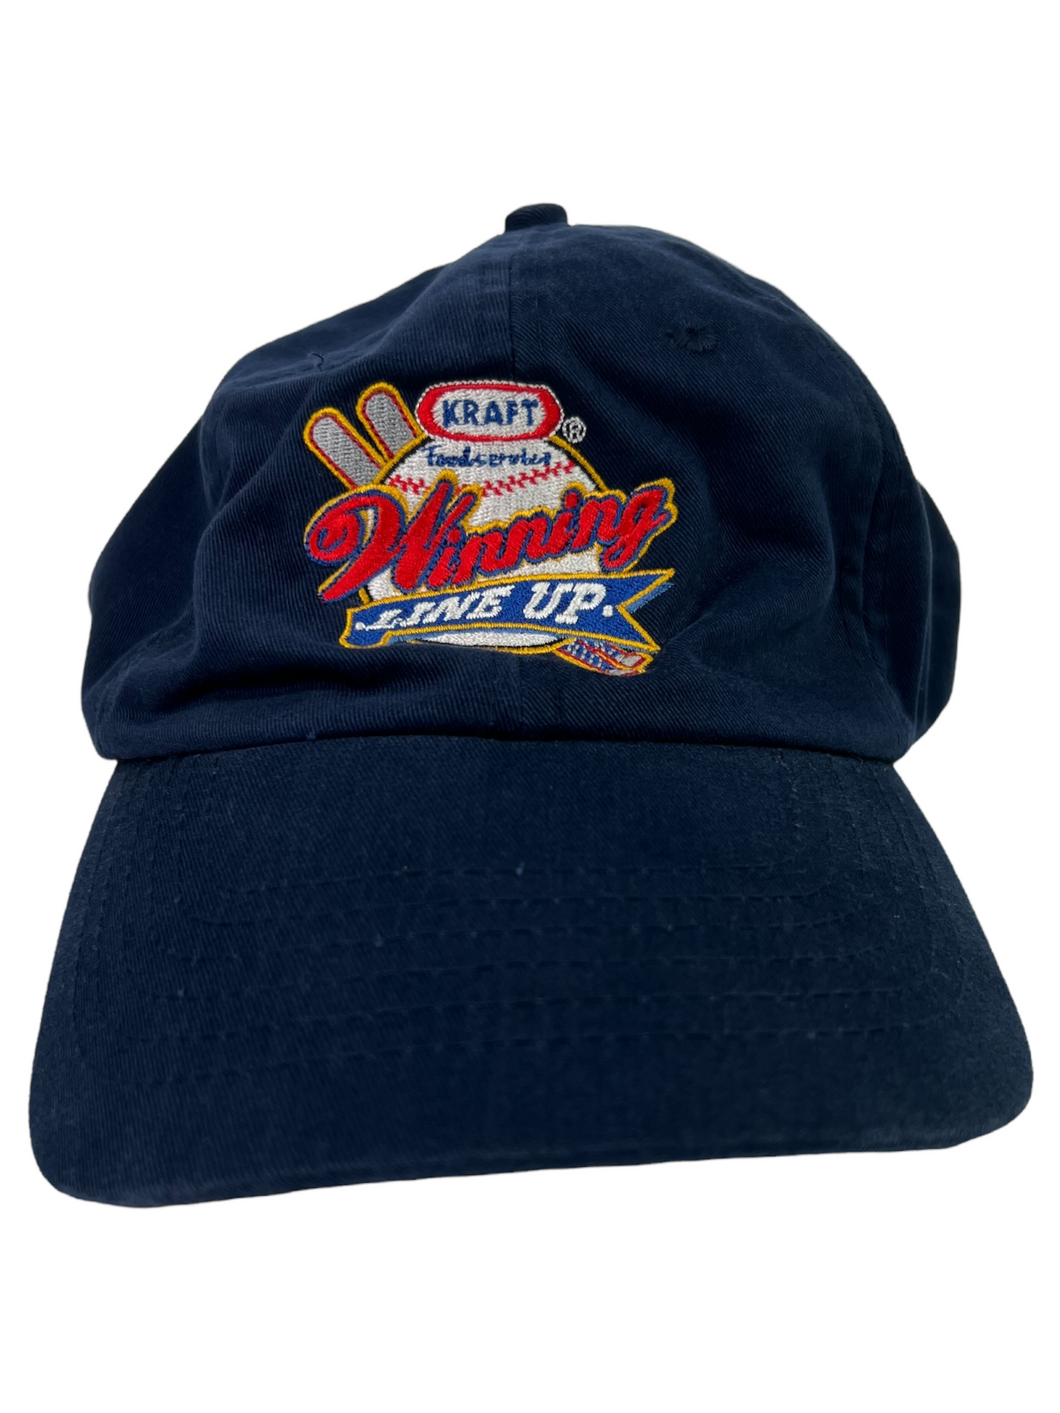 2000s Kraft winning line up baseball Nabisco strap back hat